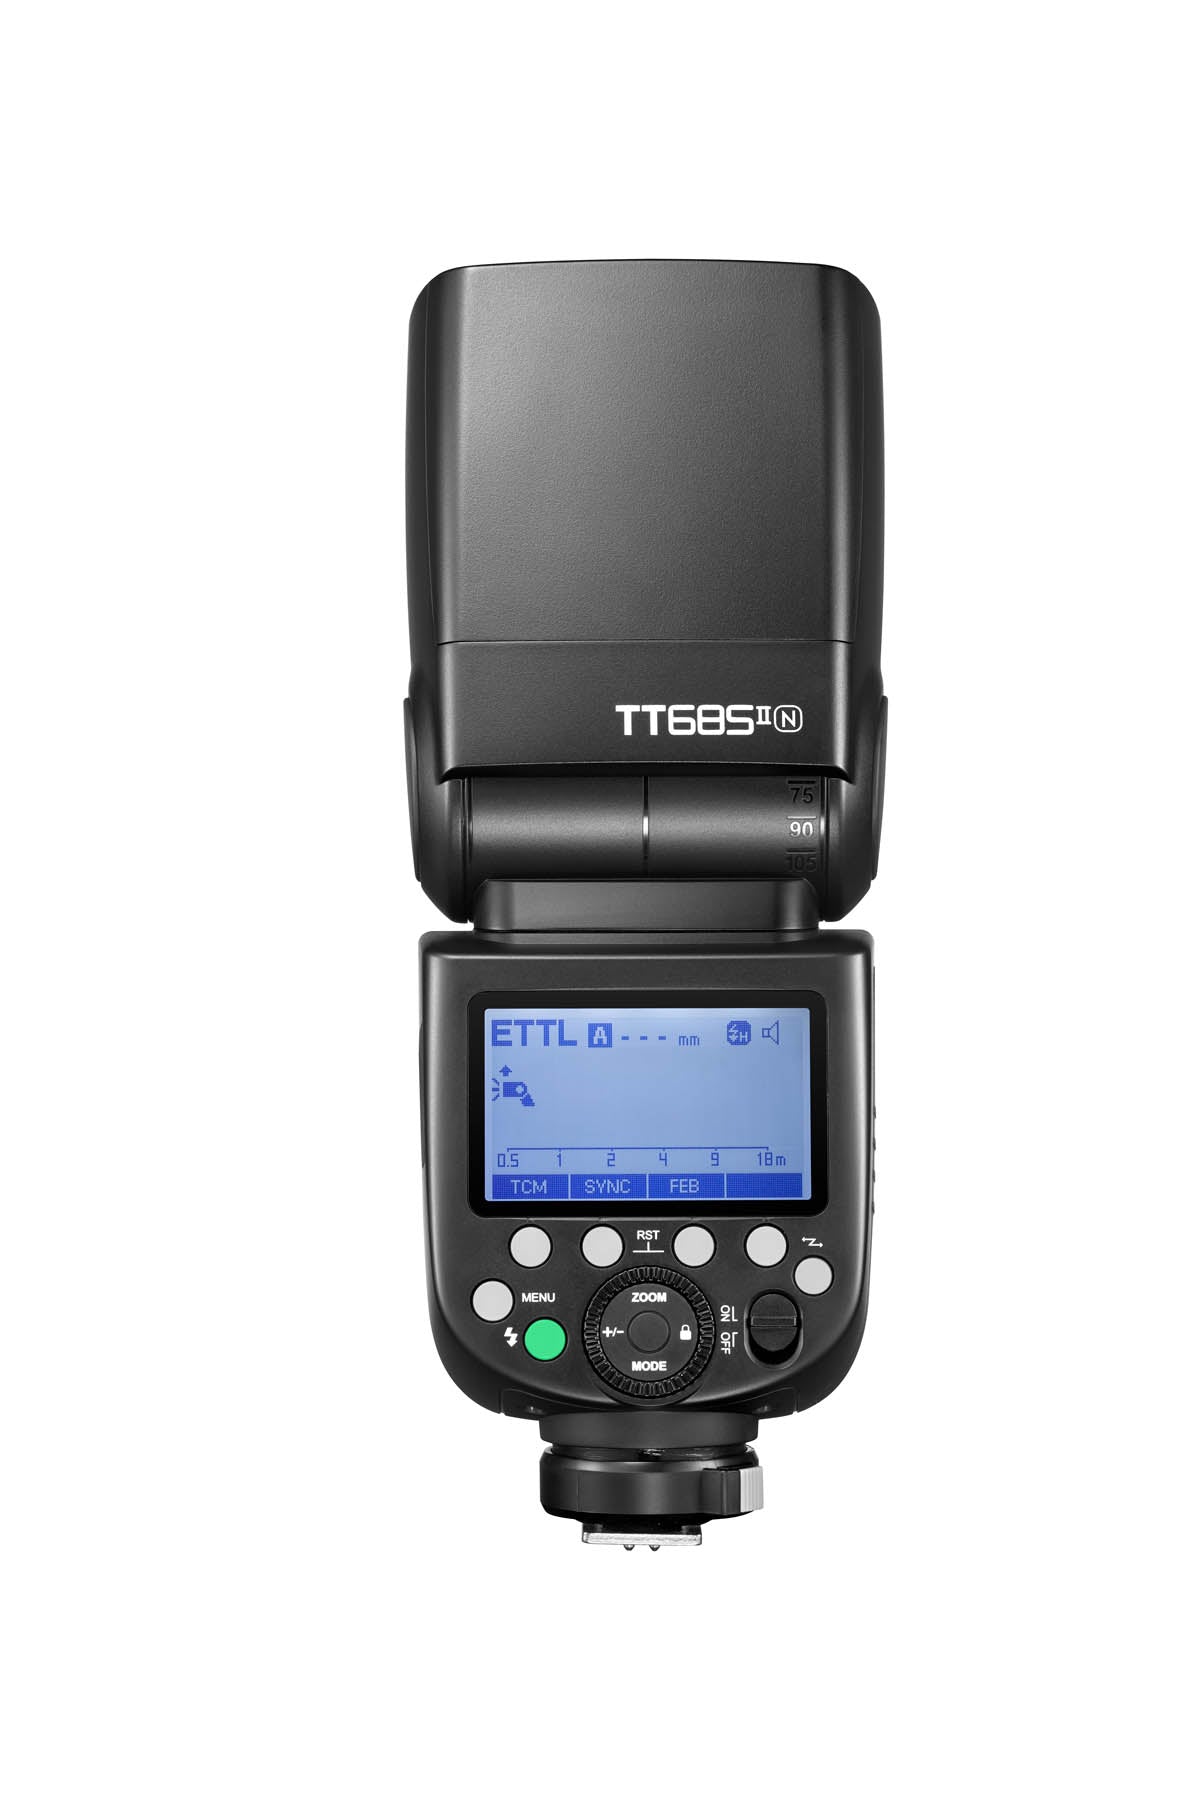 Godox TT685IIN Speedlight for Nikon